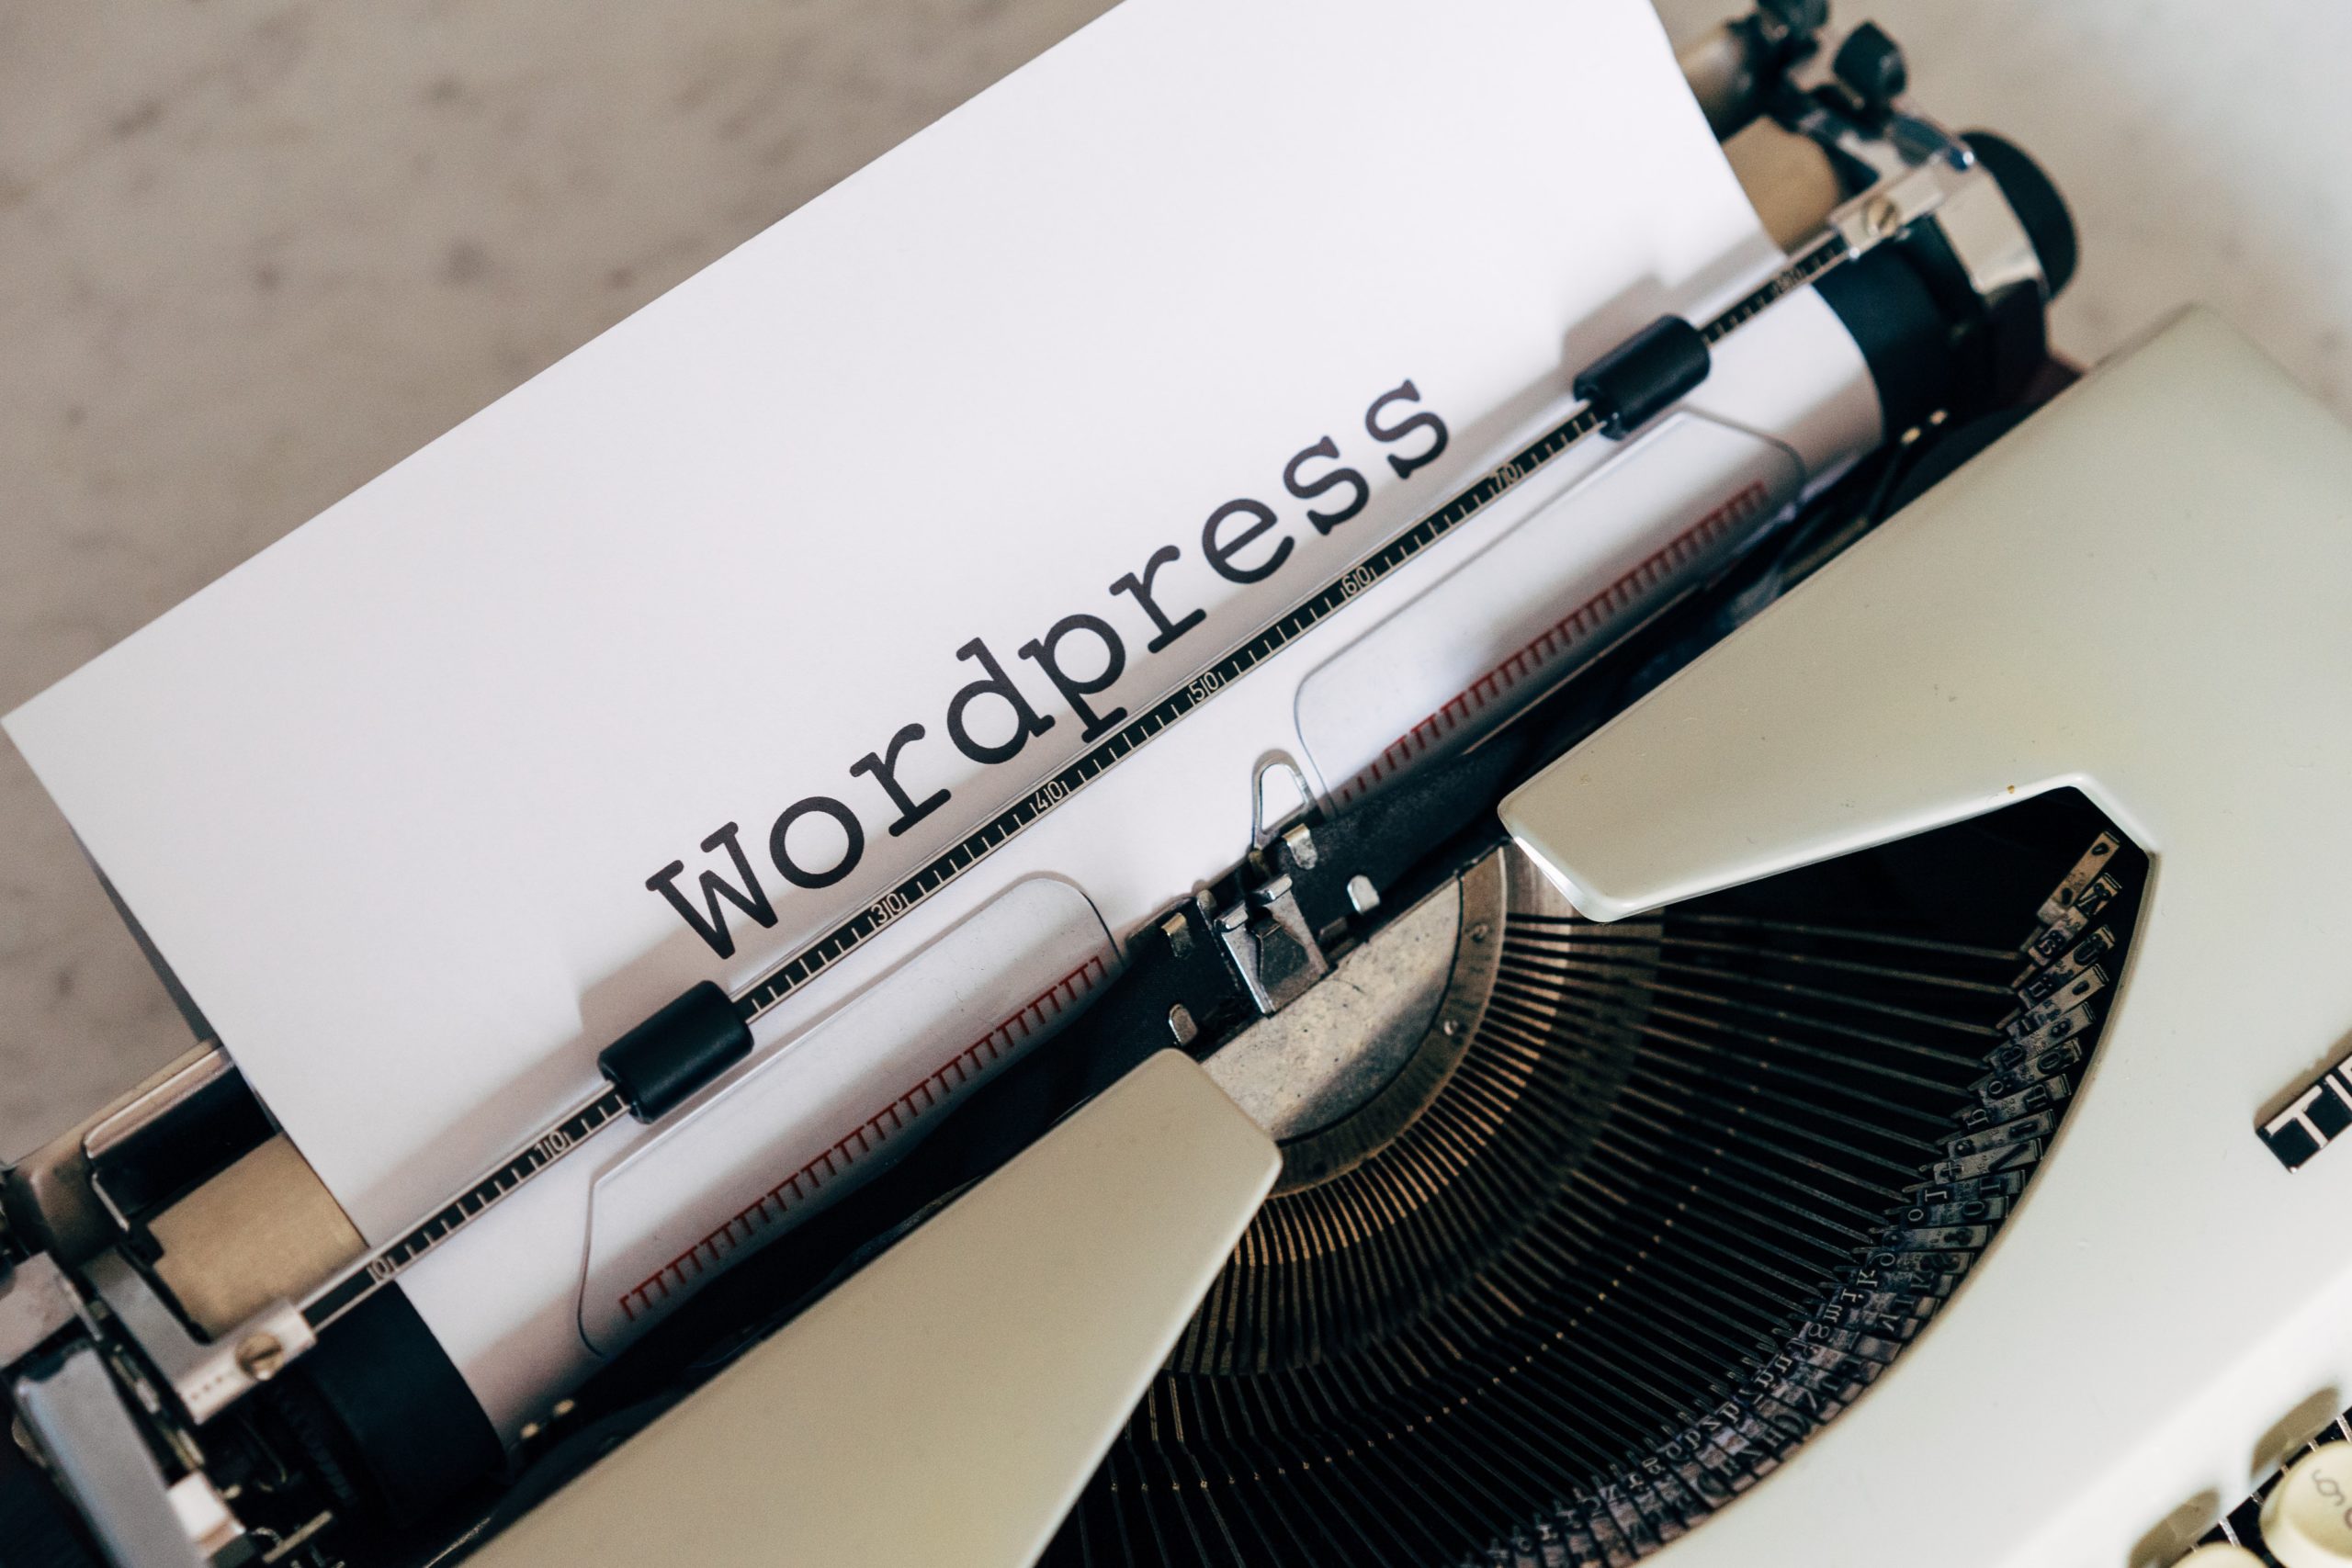 Wordpress Step by Step